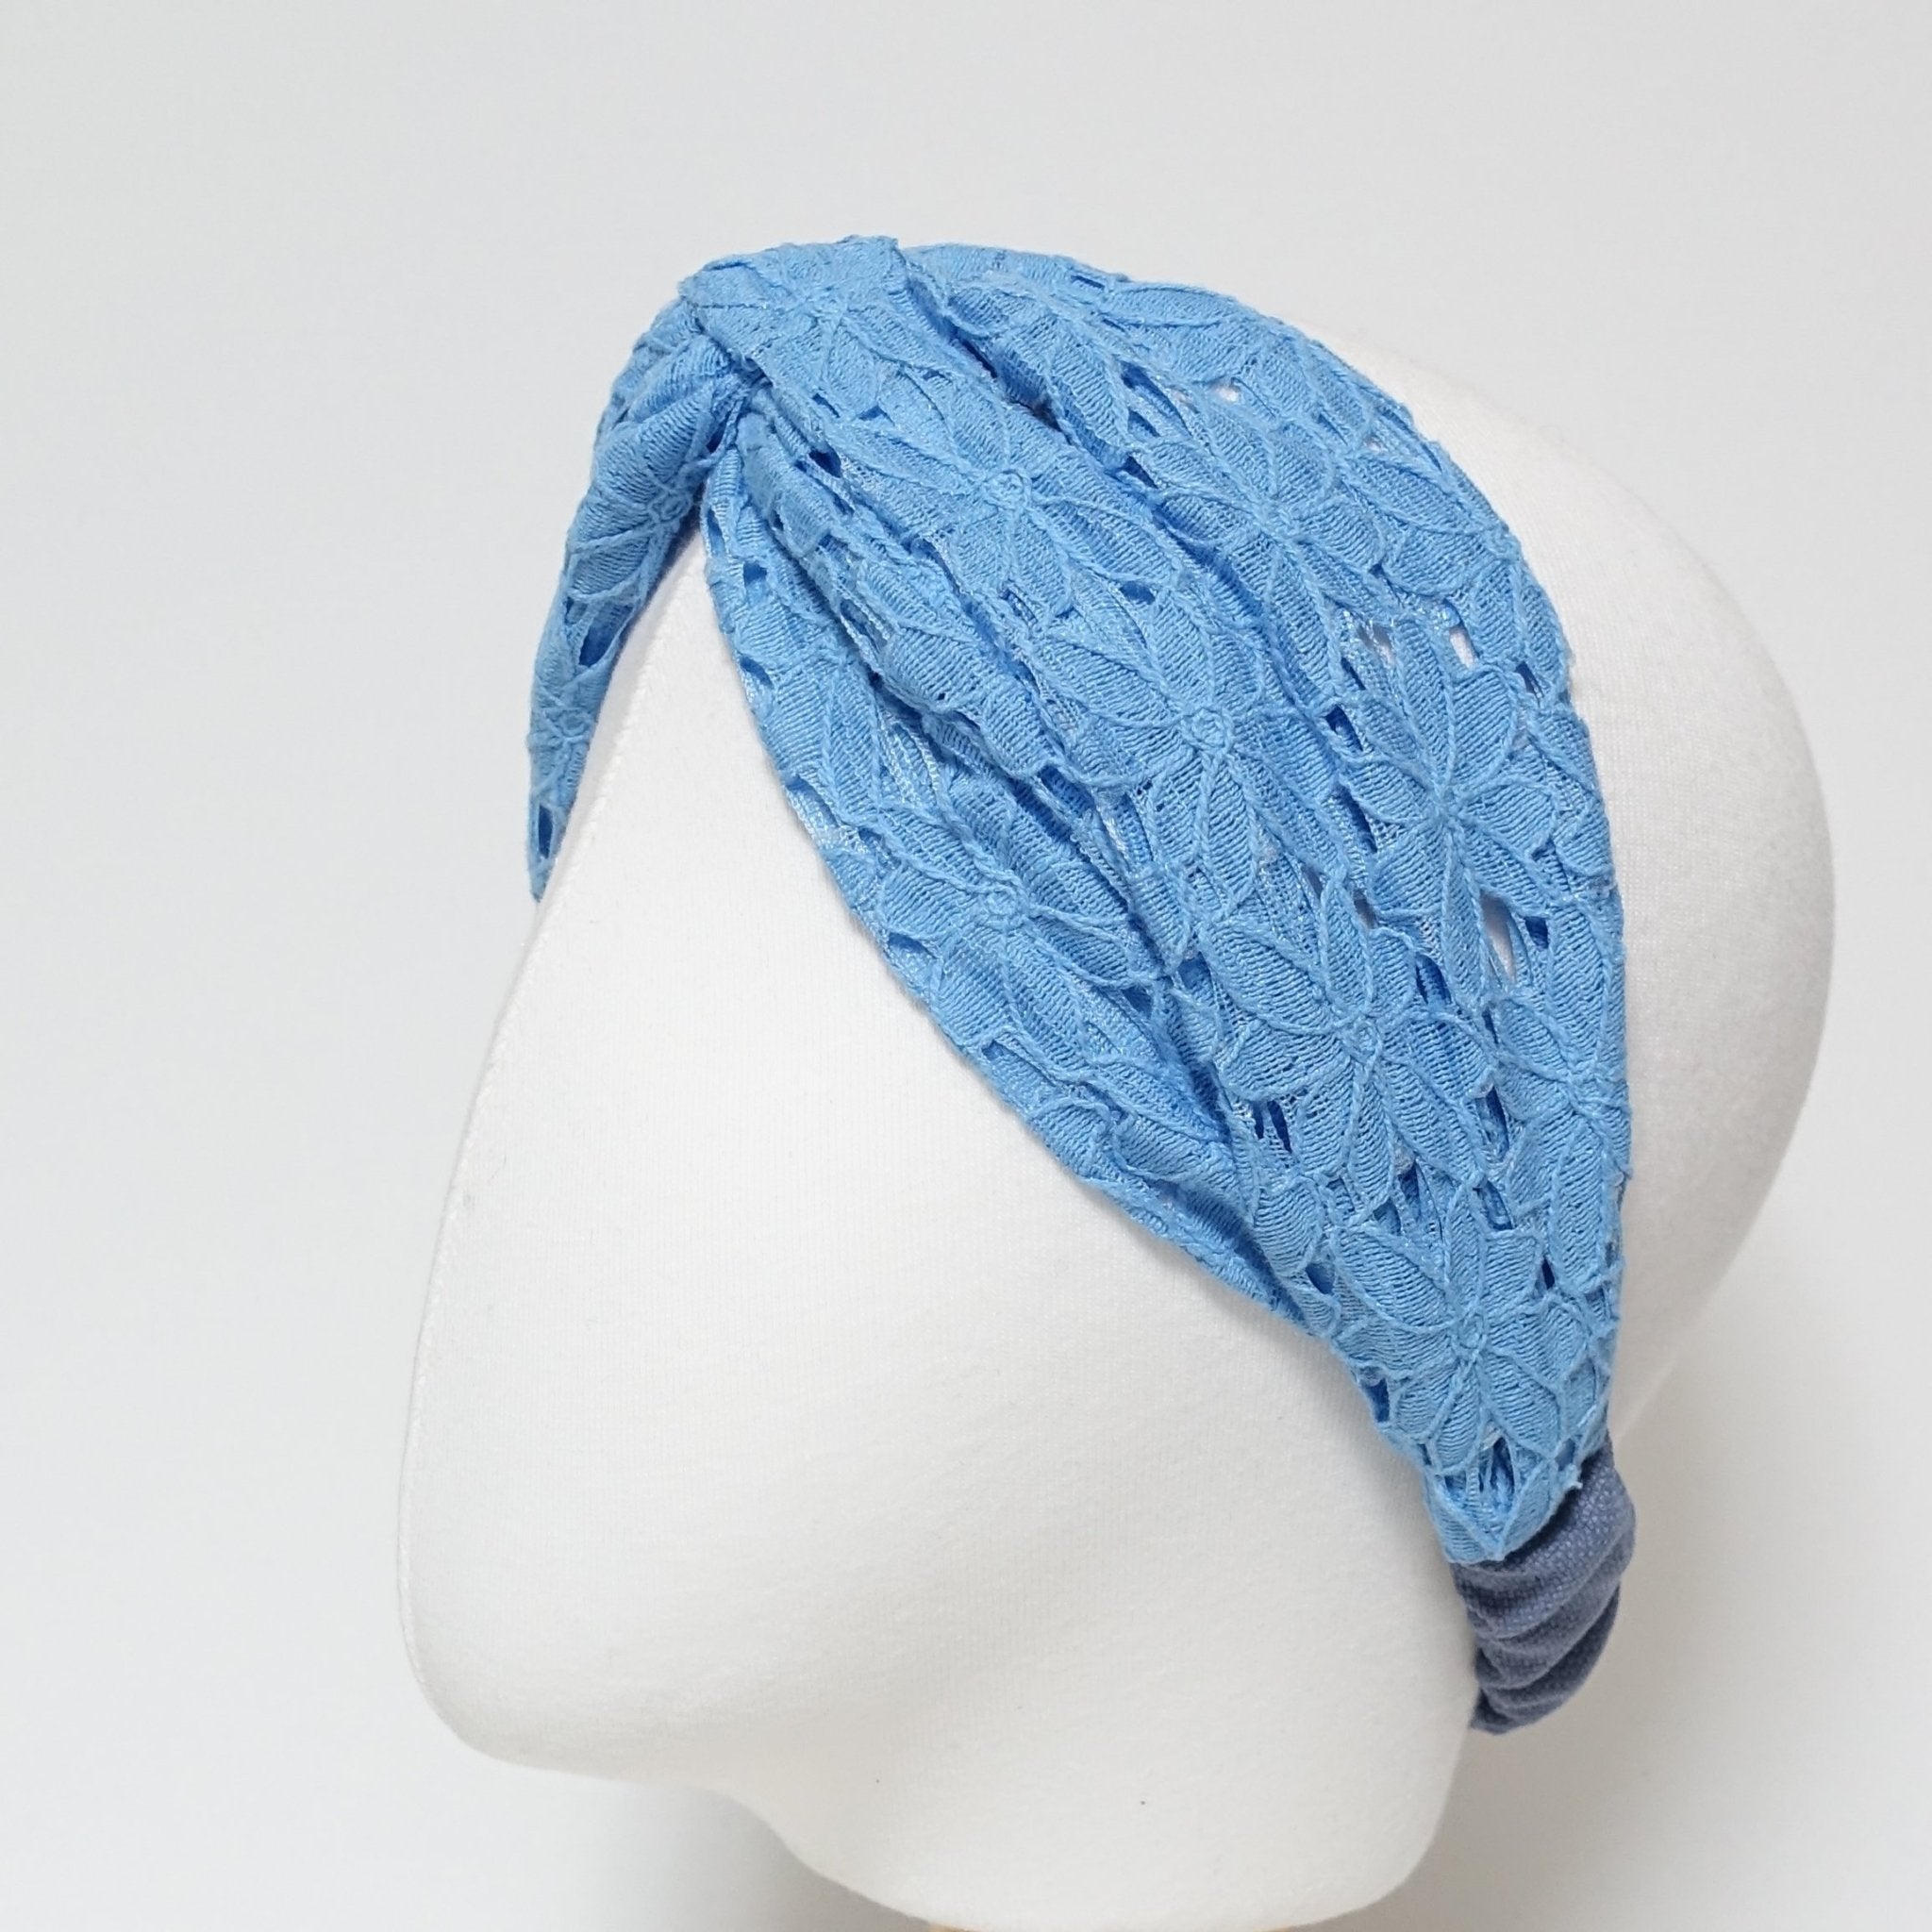 VeryShine cotton flower lace headband floral print fashion elastic hairband hair accessory for women